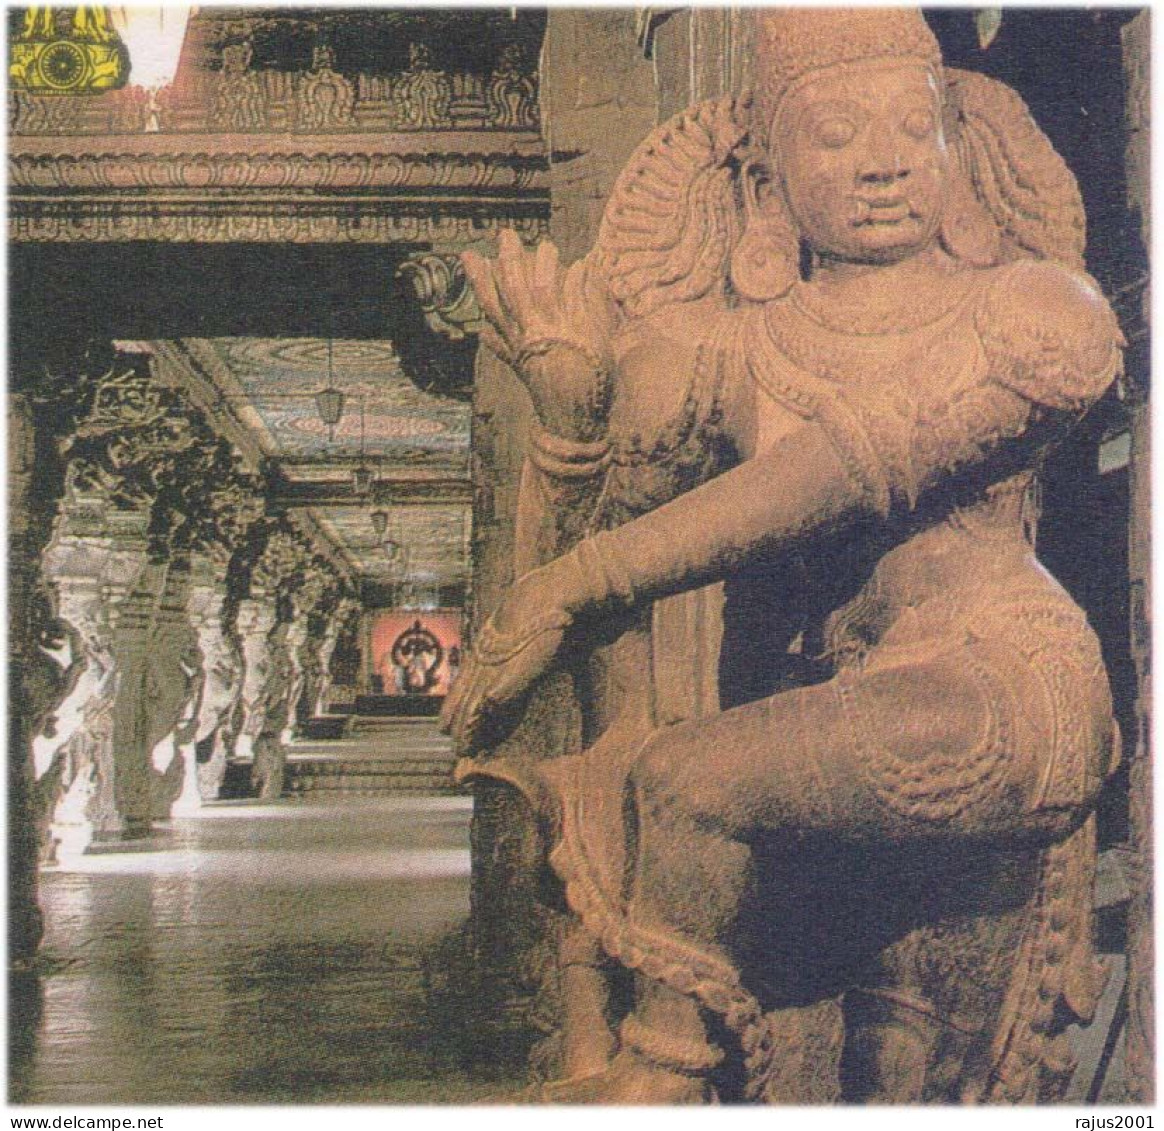 Pope's Visit Madras India, Nataraja God Shiva As The Divine Cosmic Dancer, Temple, Hindu Gods, Hinduism, Mythology FDC - Hinduism